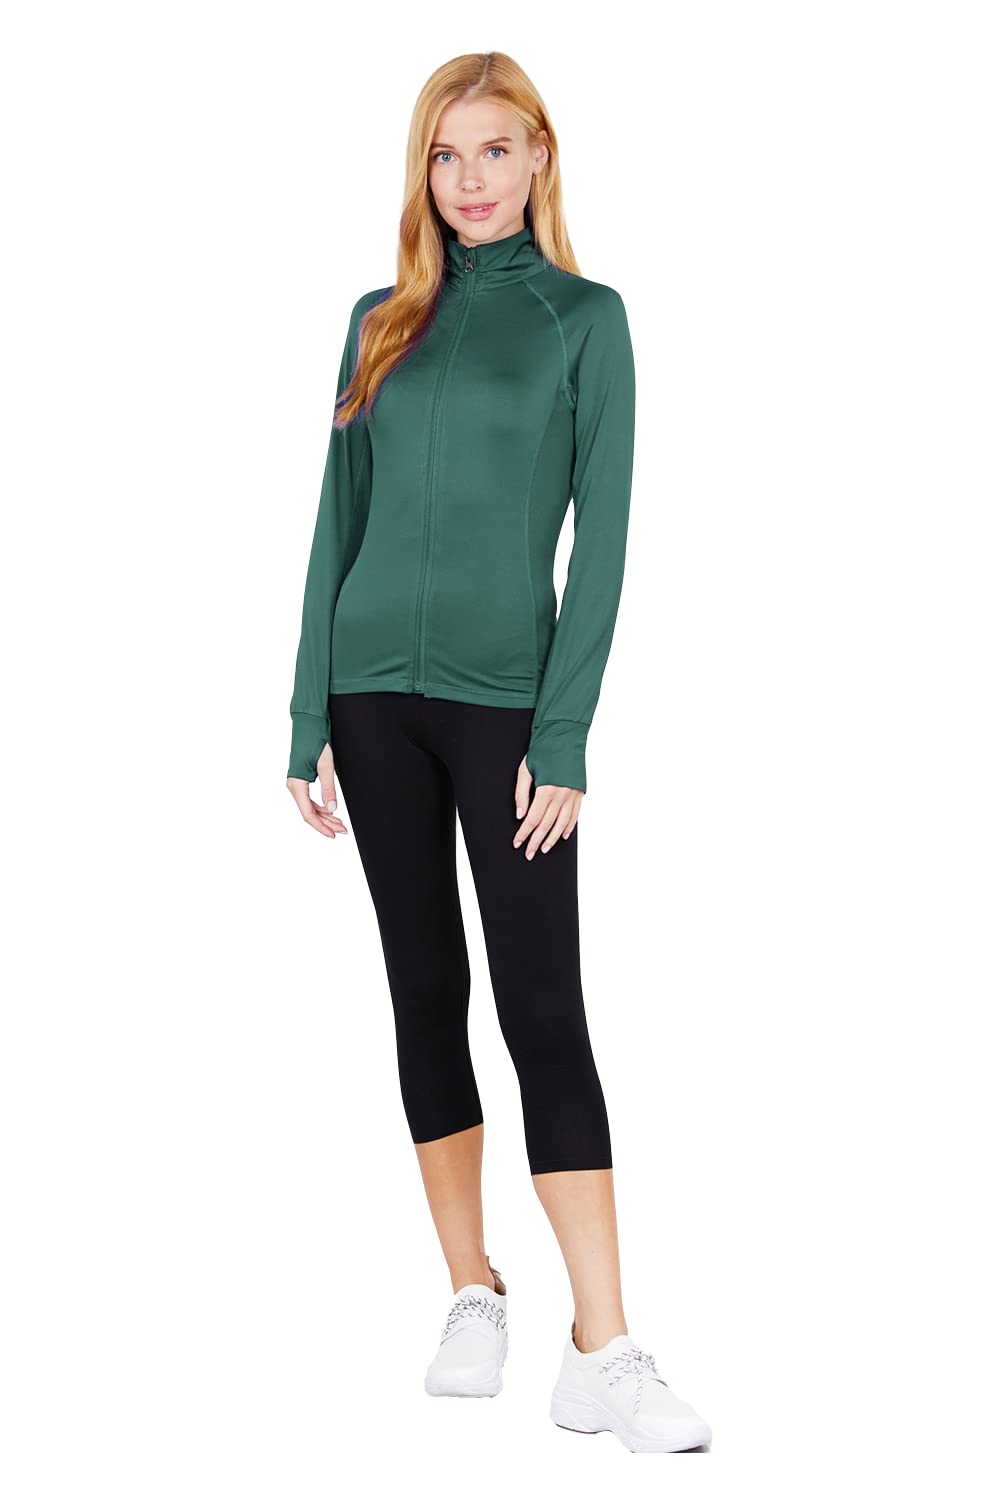 Women's Long Sleeve Zip Up Athletic Wear Sweater Work Out Jacket Mid G –  Khanomak